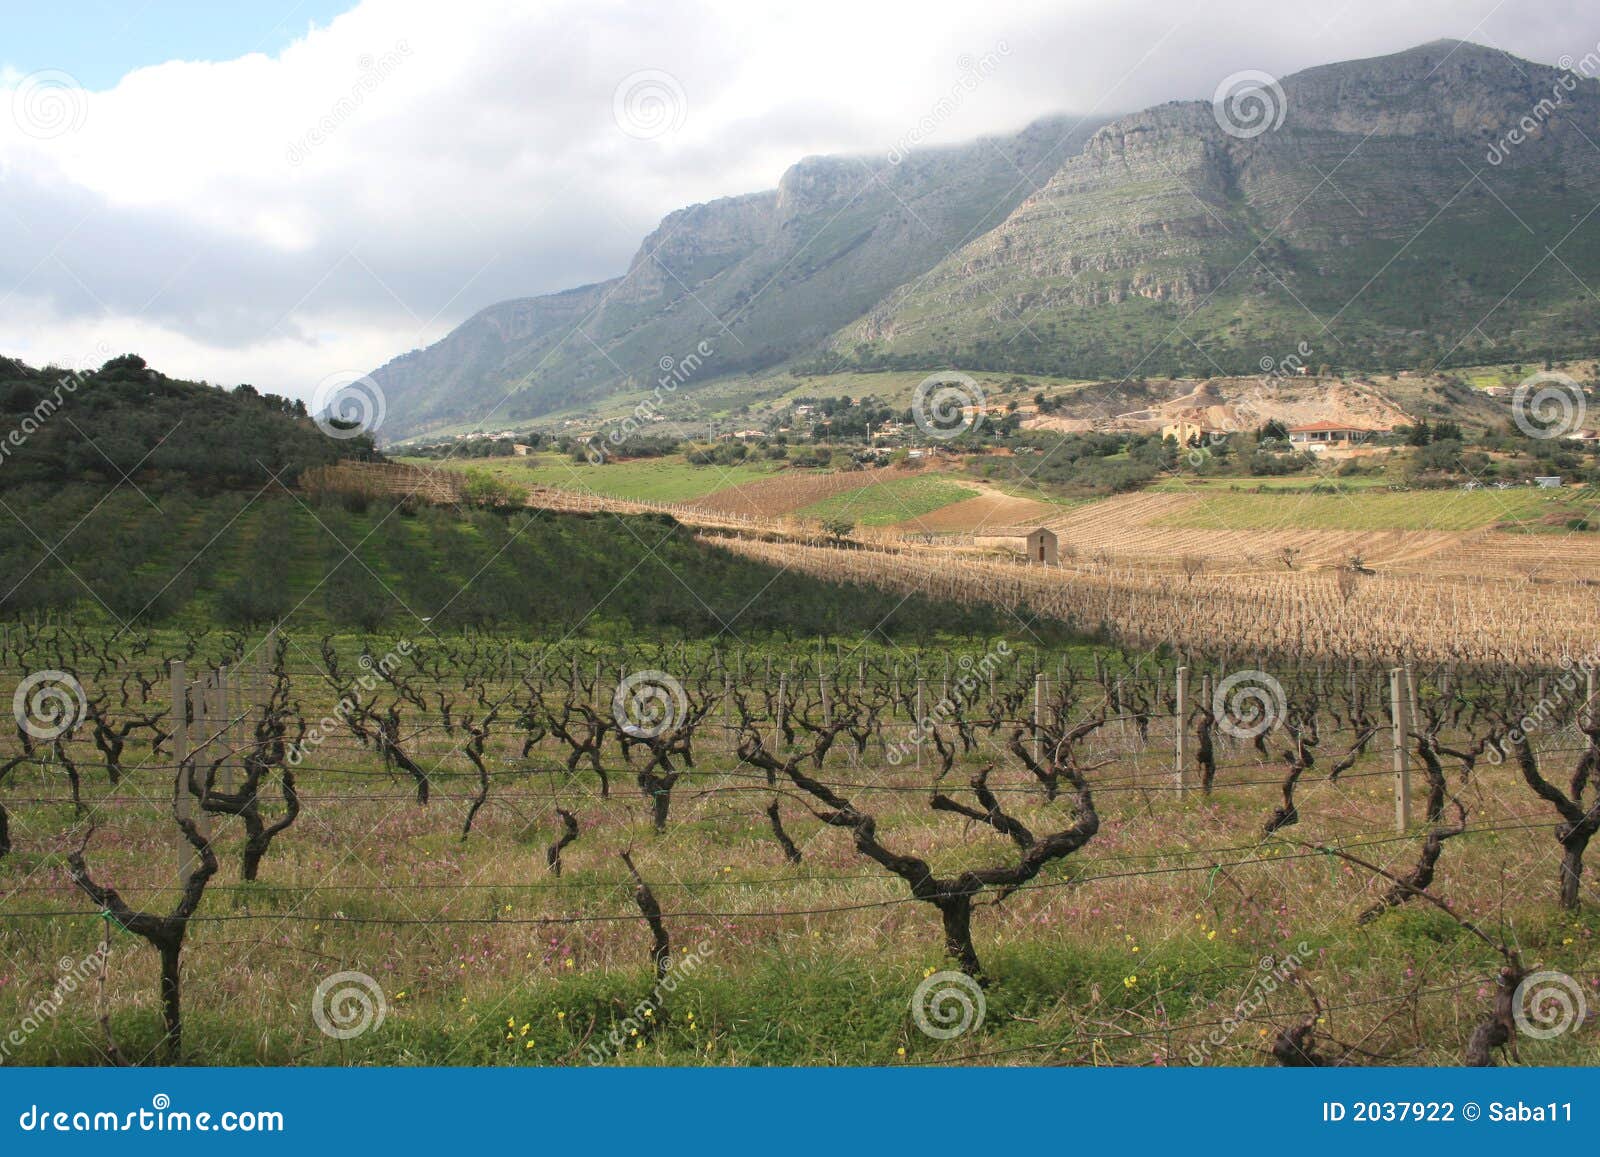 vineyards cultivation & mount. sicily